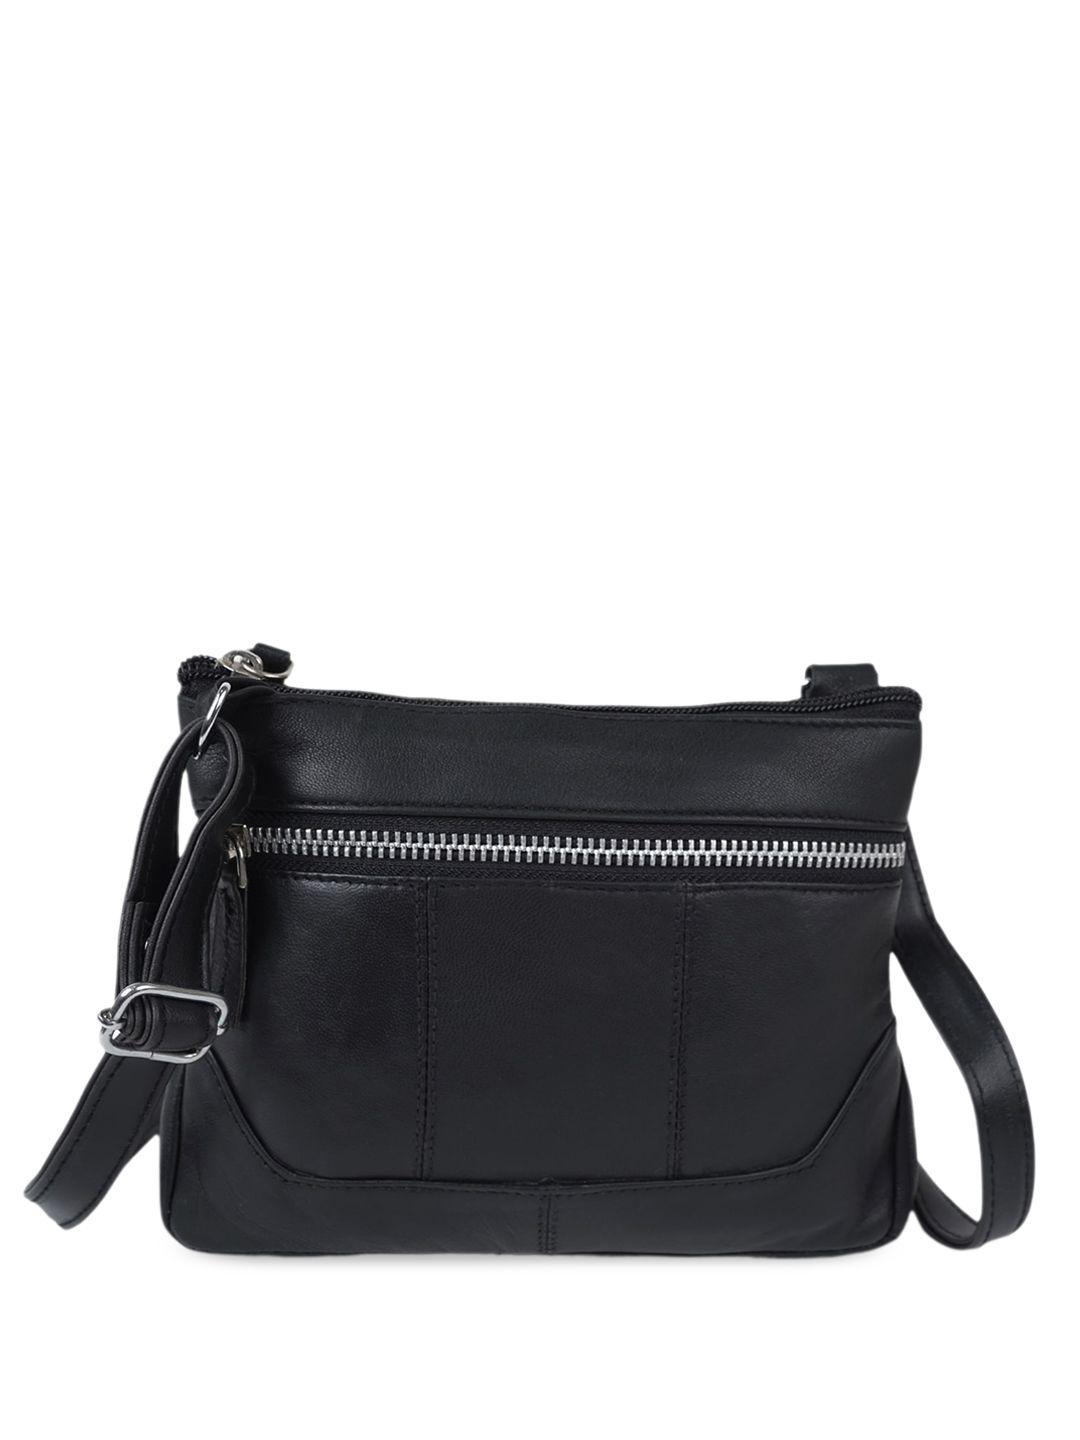 cimoni black leather structured sling bag with tasselled